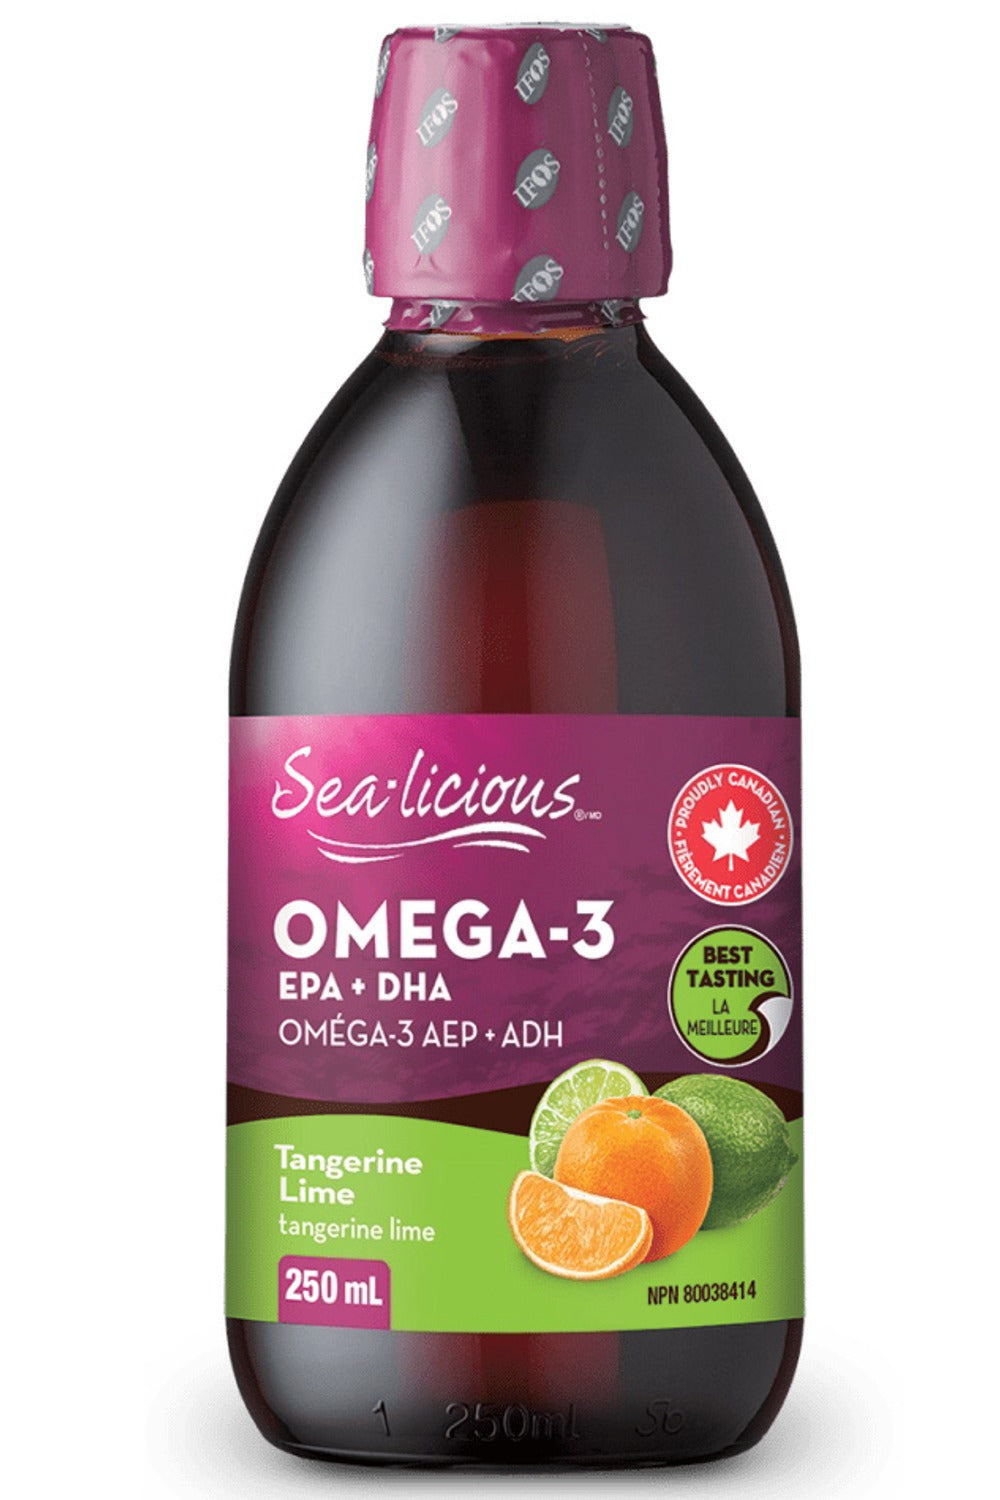 SEA-LICIOUS Omega-3 EPA-DHA (Tangerine Lime - 250 ml)